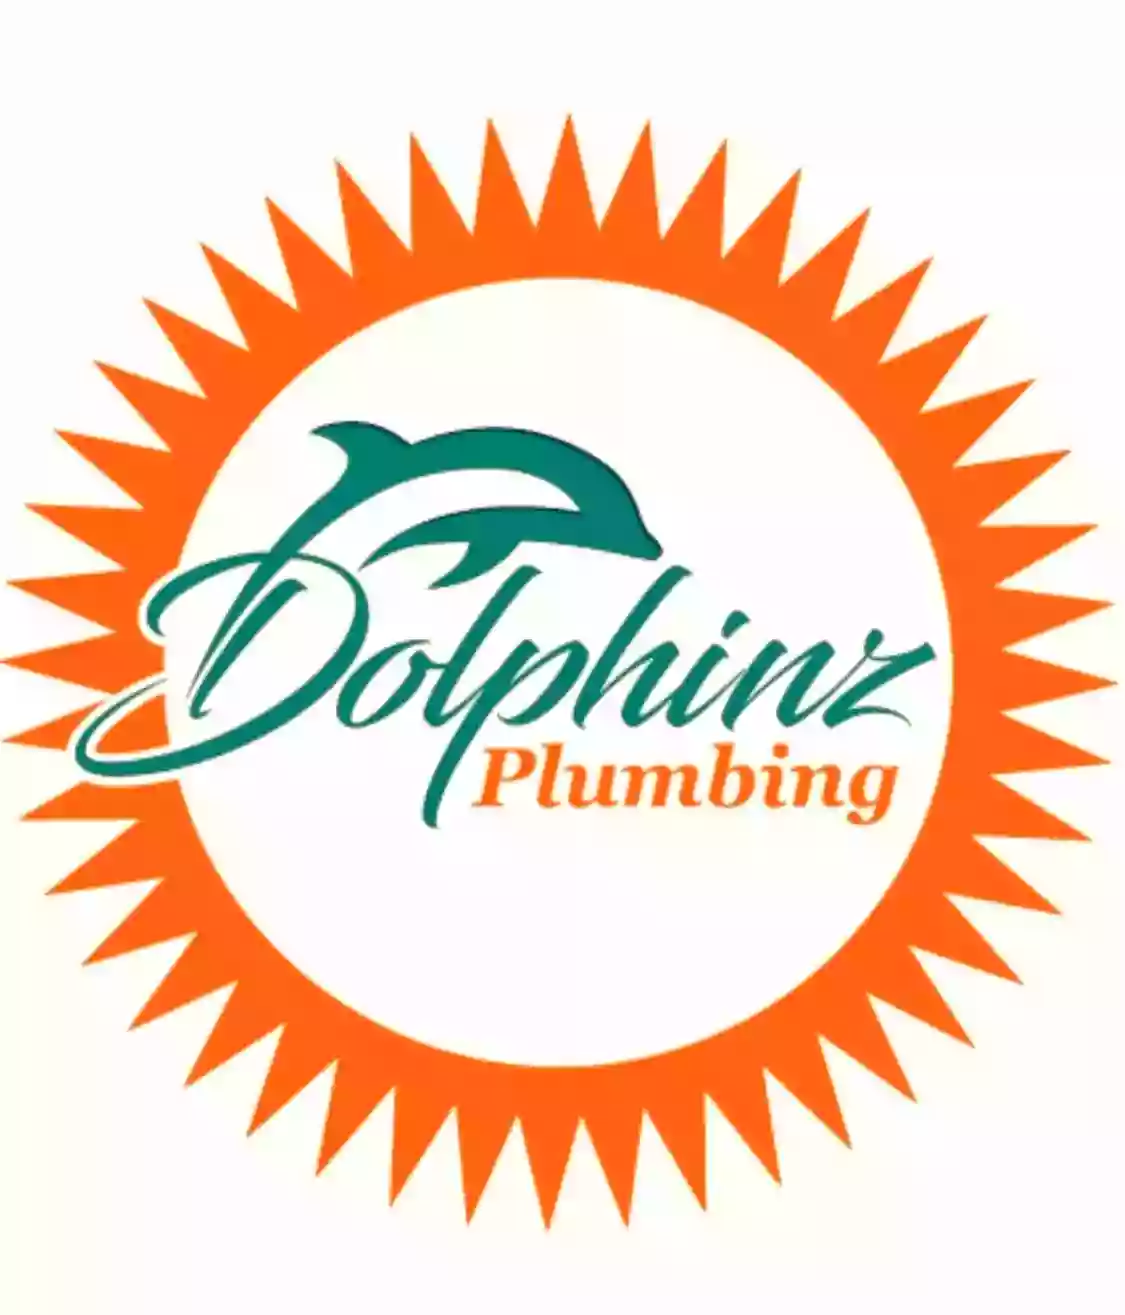 DOLPHINZ PLUMBING